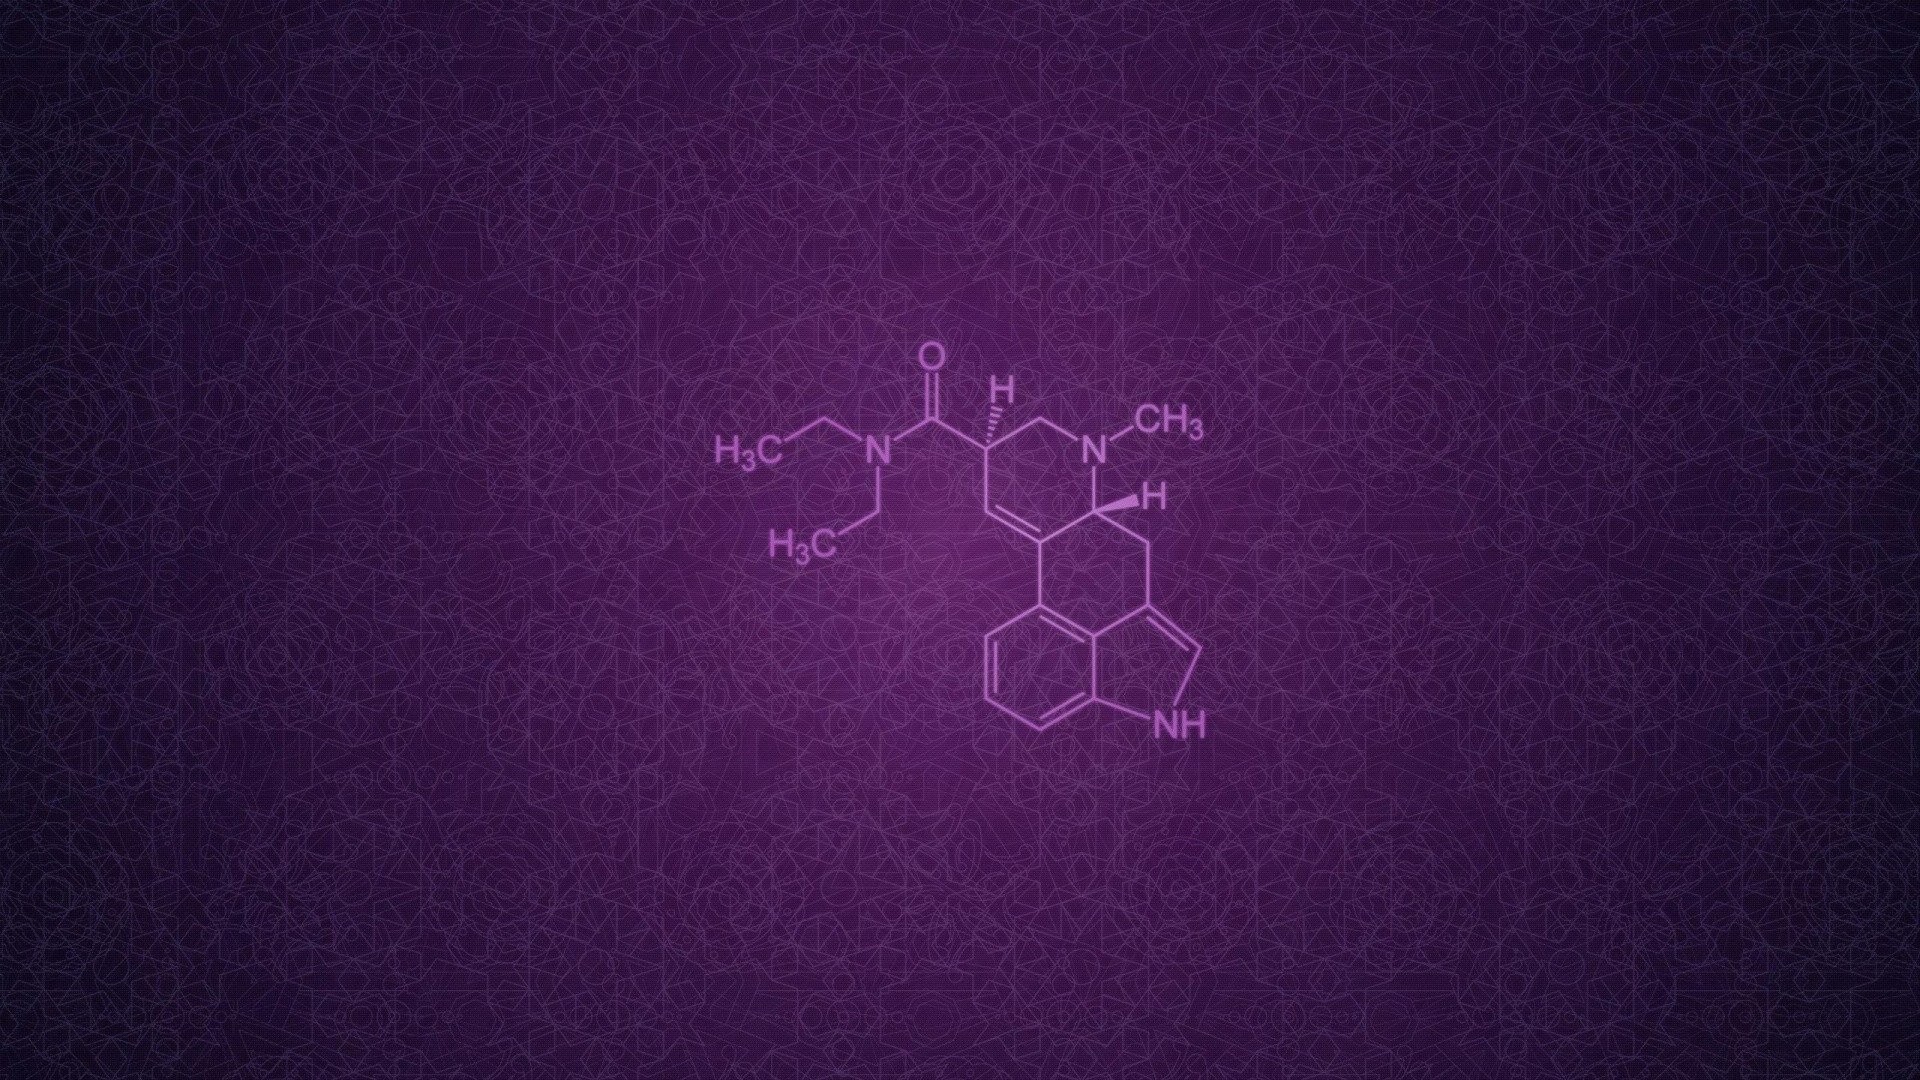 1920x1080 Chemistry Wallpaper â  Free Awesome Hd Backgrounds For